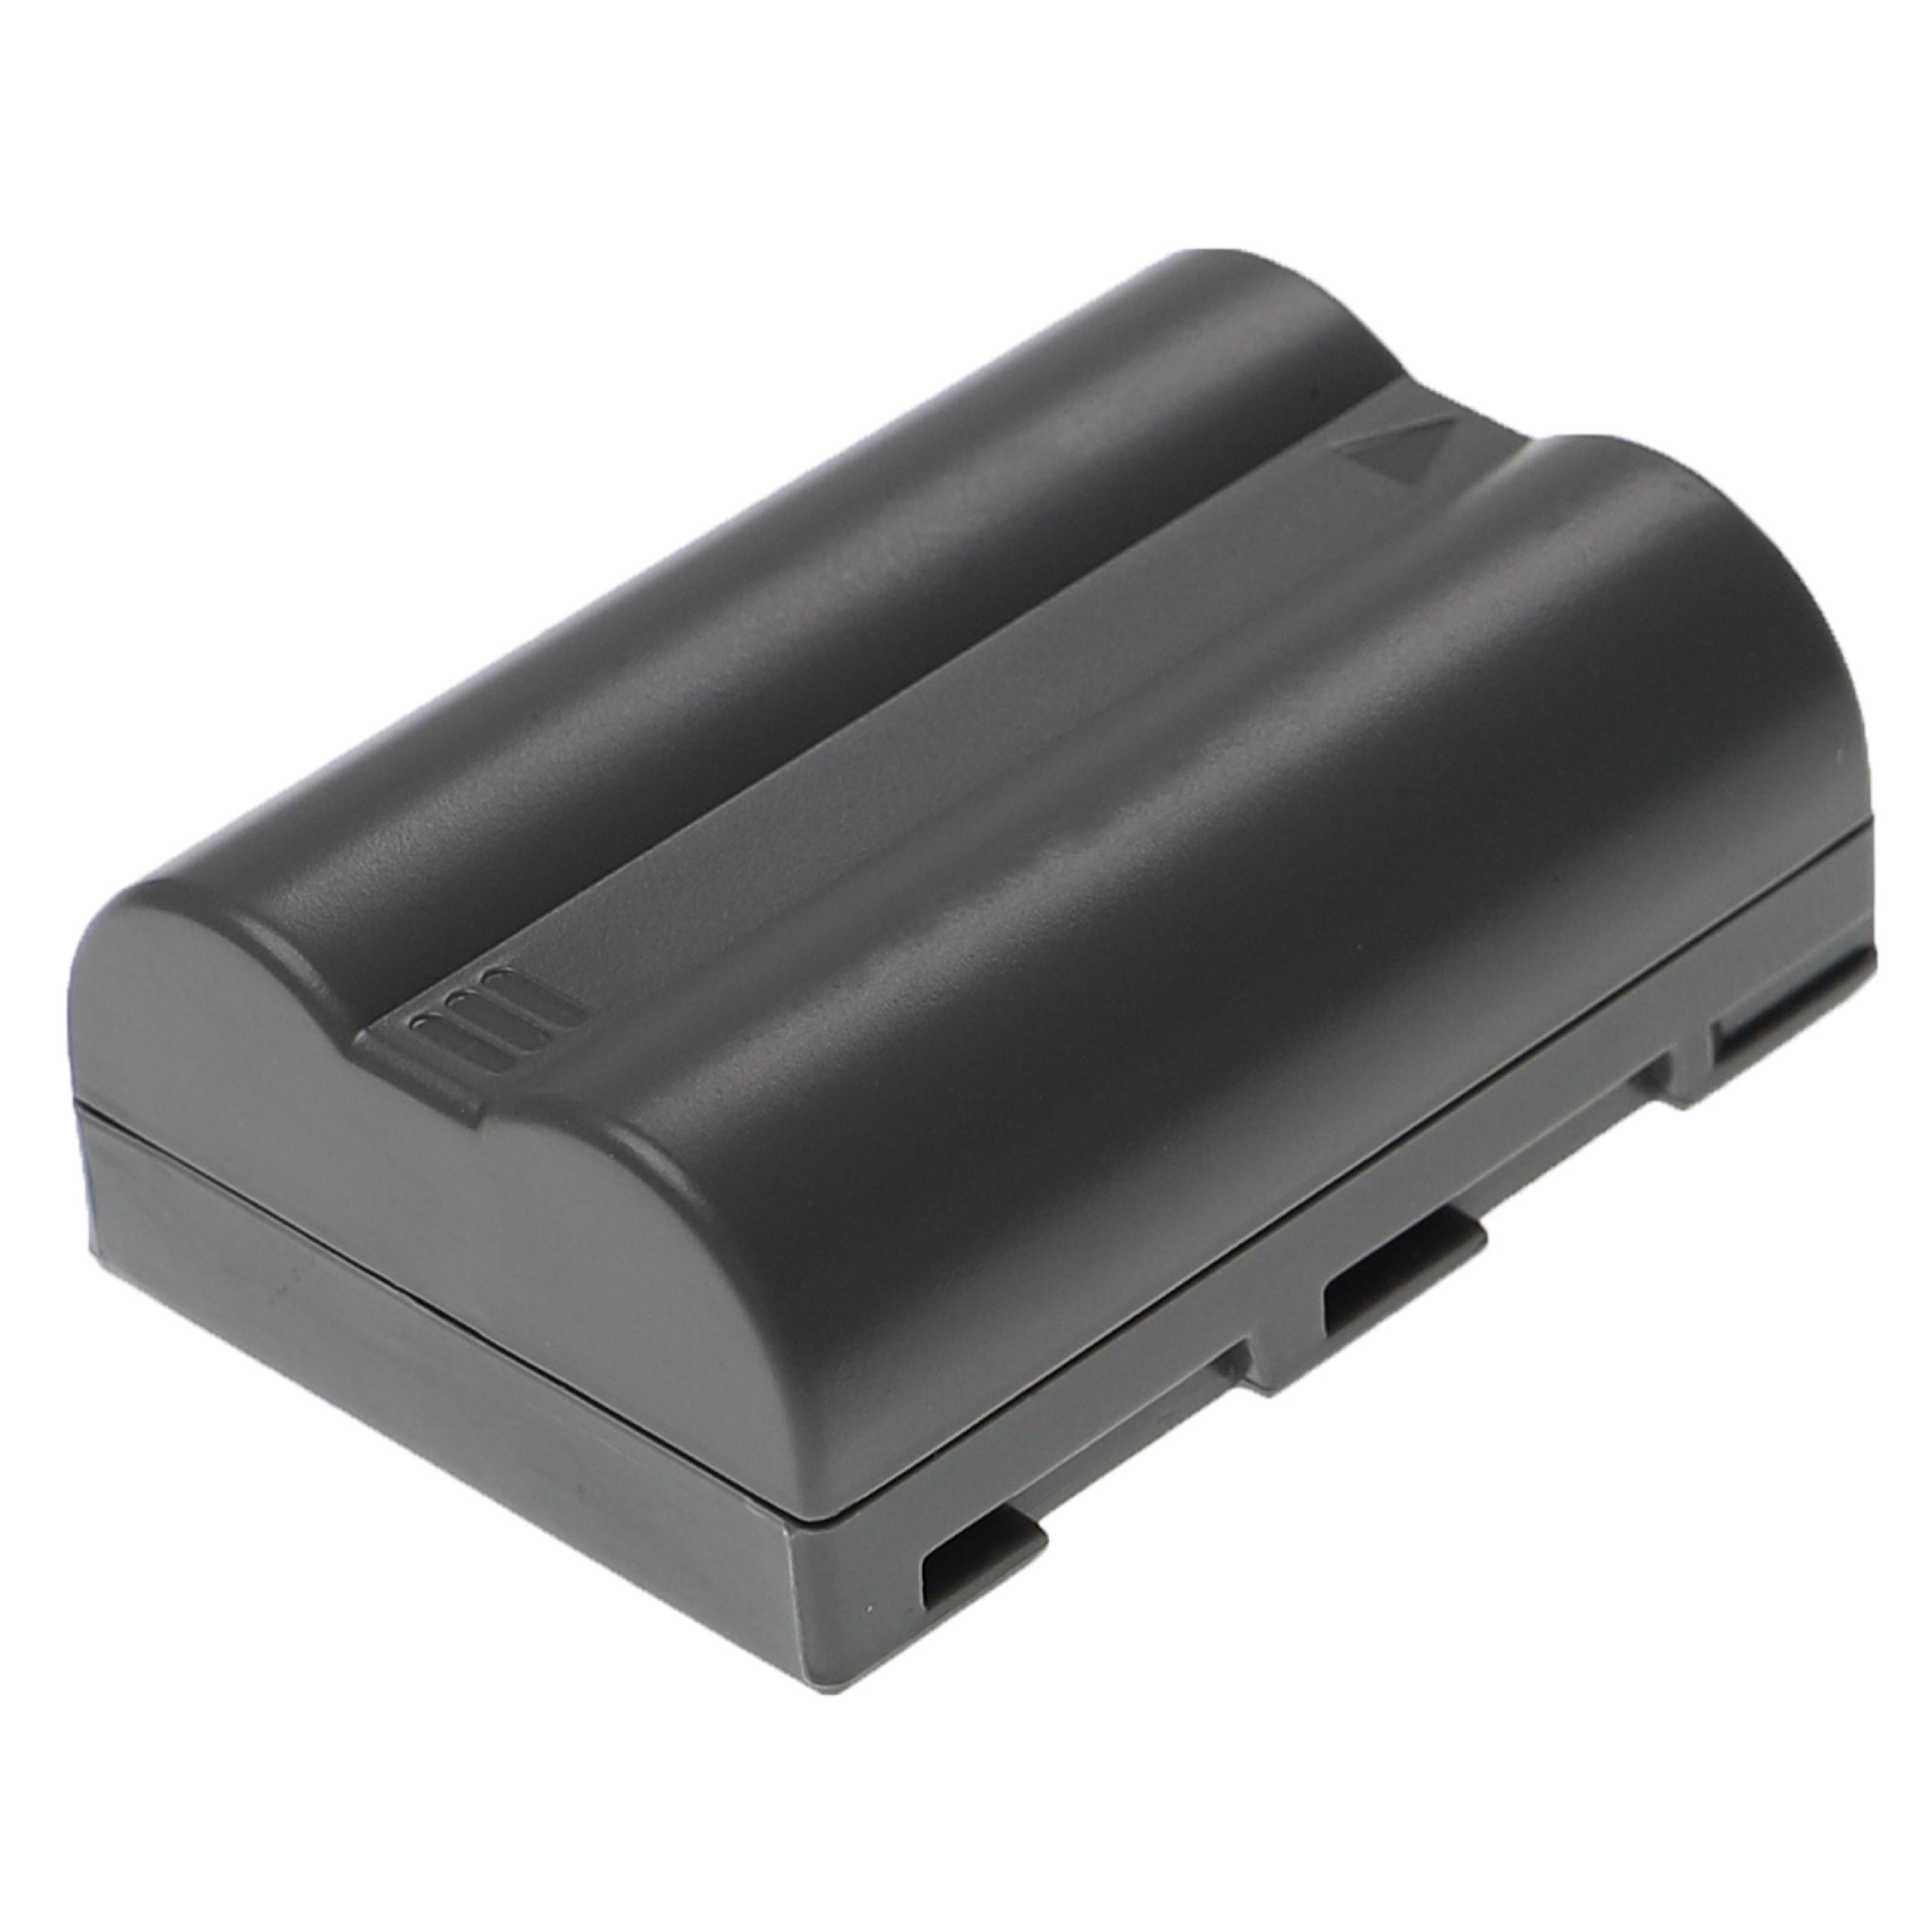 2x Akumulator do aparatu cyfrowego zamiennik Fujifilm BC-150, NP-150 - 1900 mAh 7,4 V Li-Ion